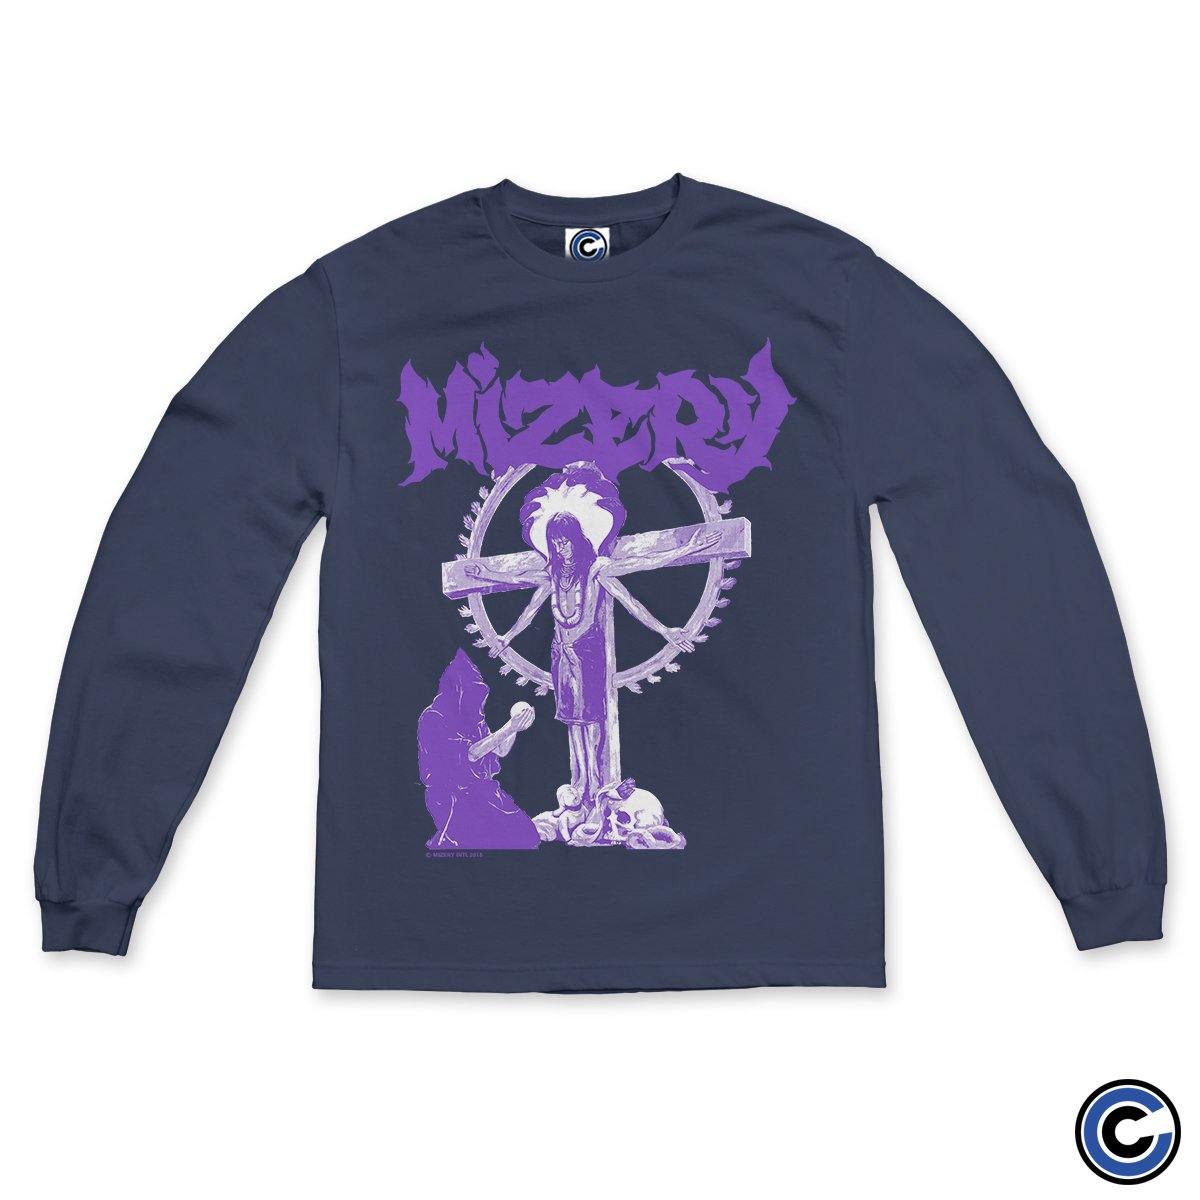 Buy – Mizery "Crucified" Long Sleeve – Band & Music Merch – Cold Cuts Merch